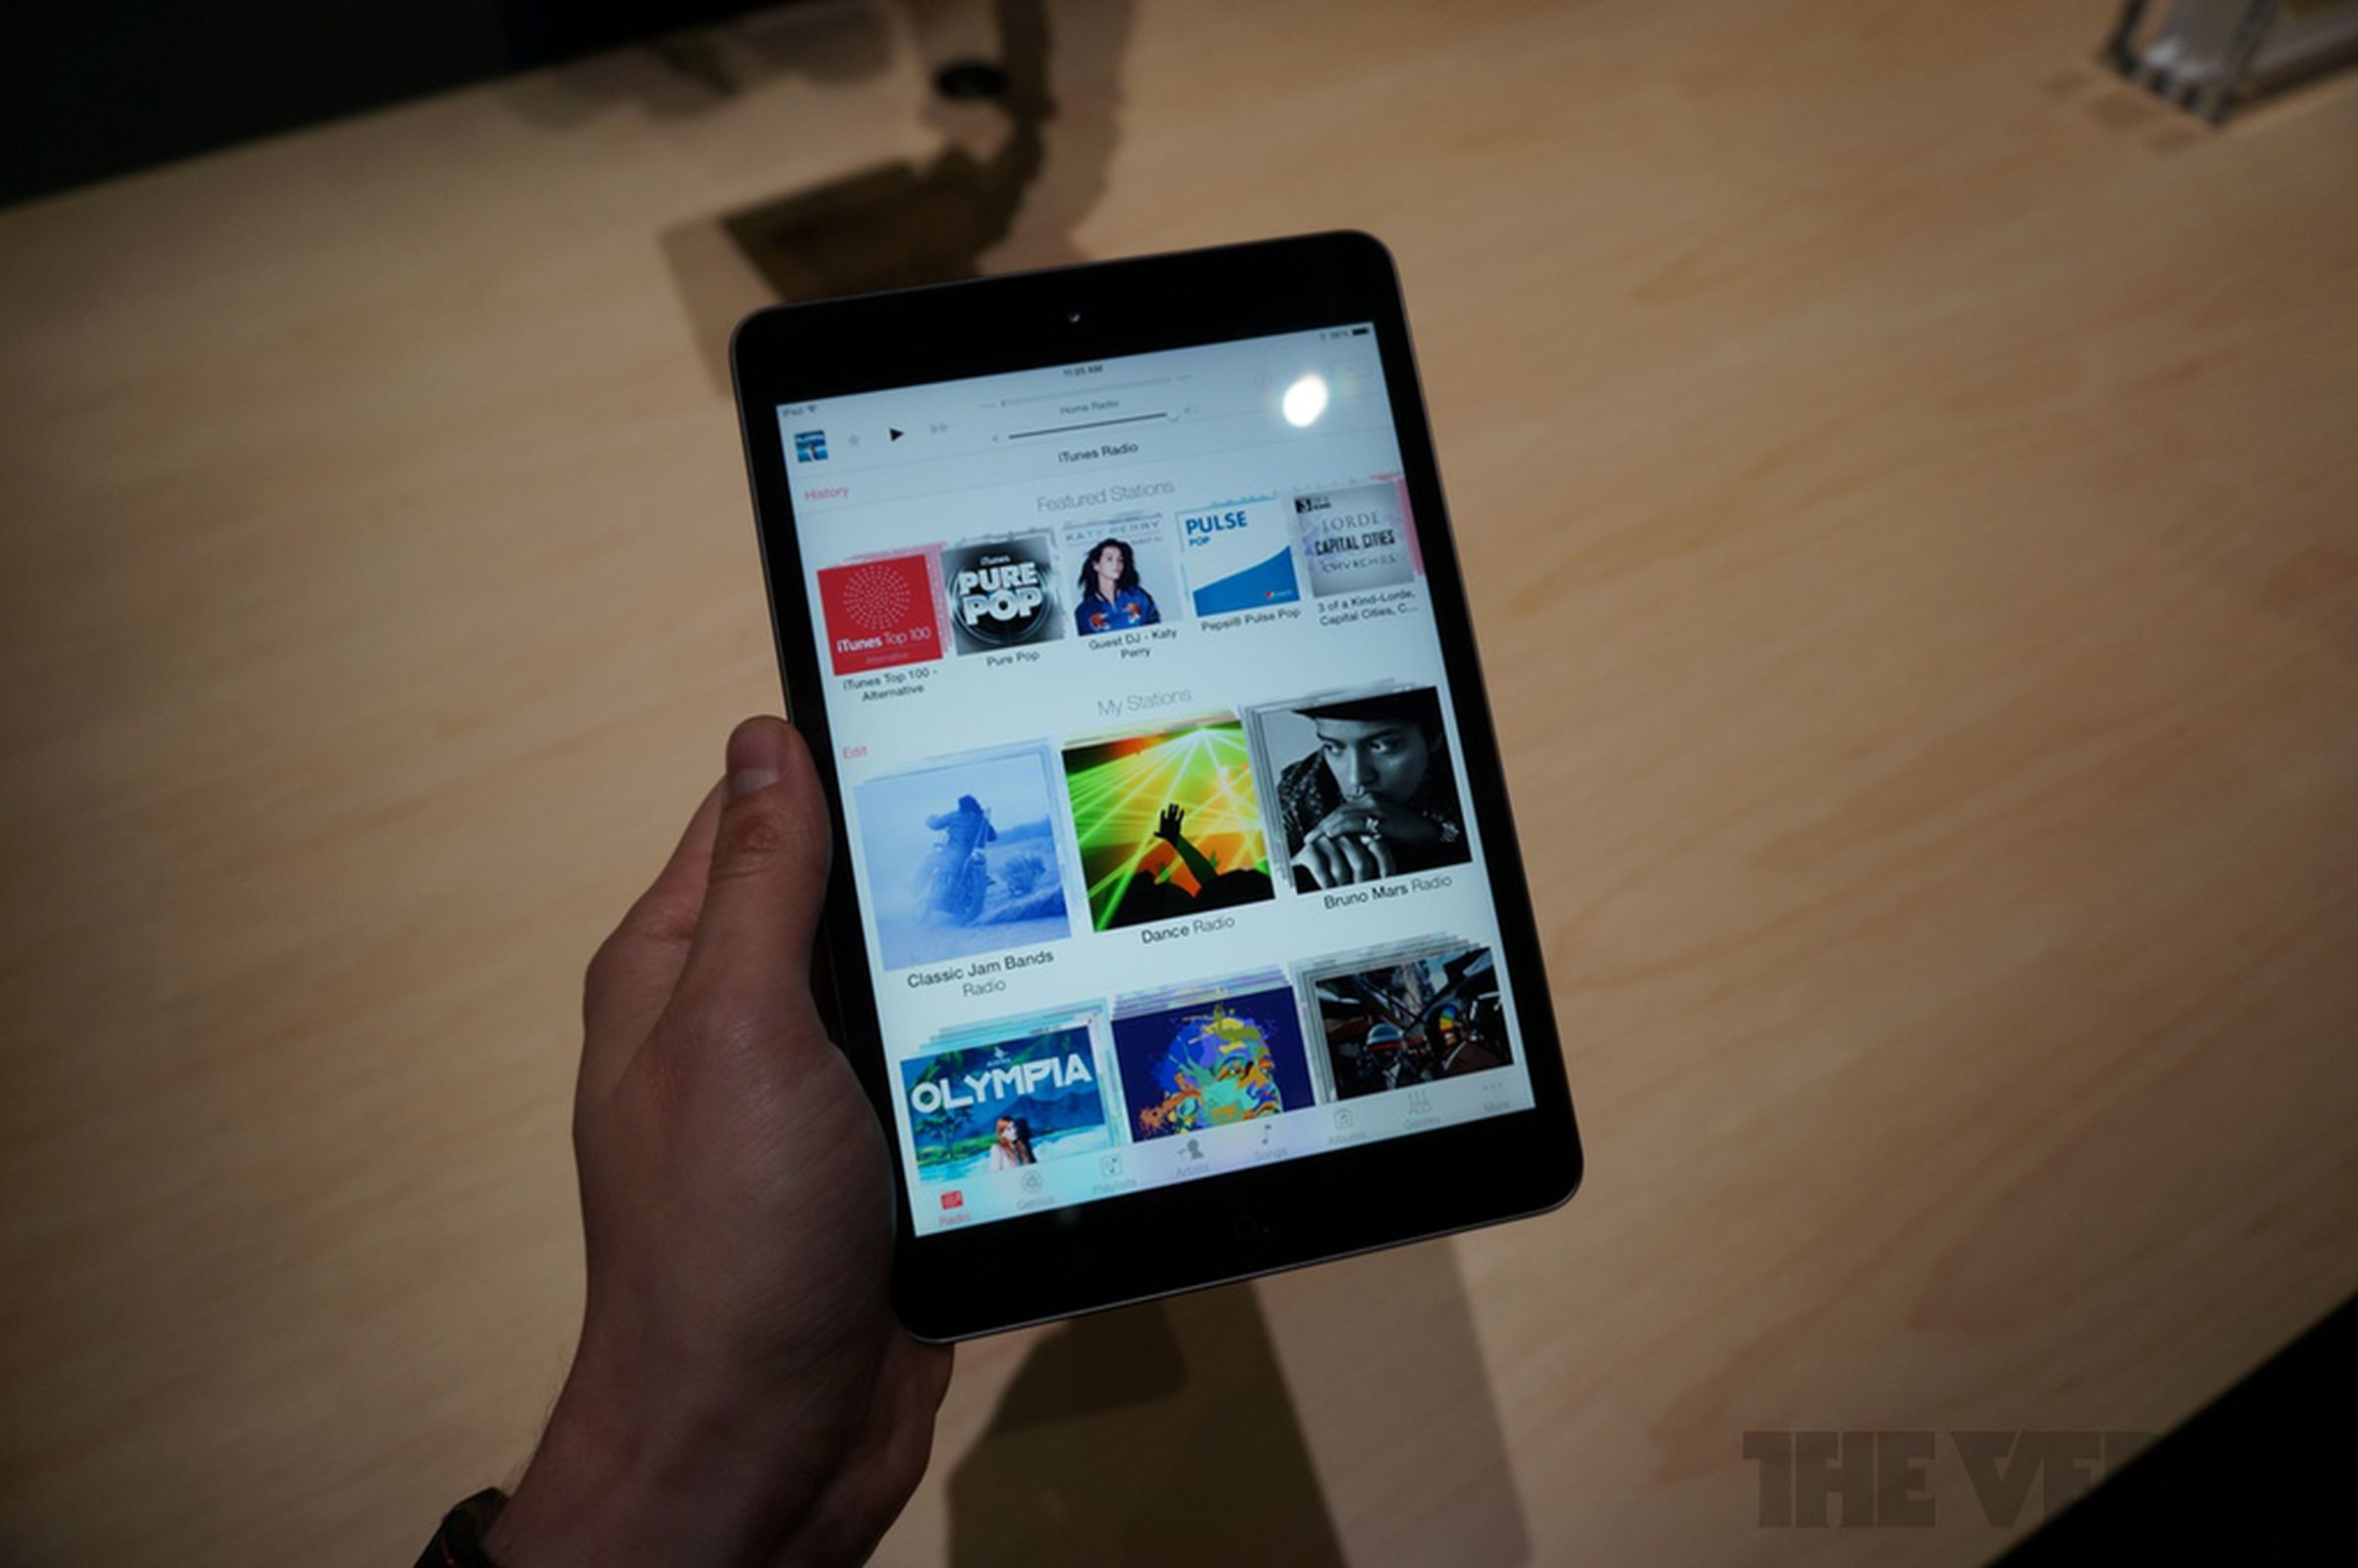 iPad mini with Retina display hands-on photos